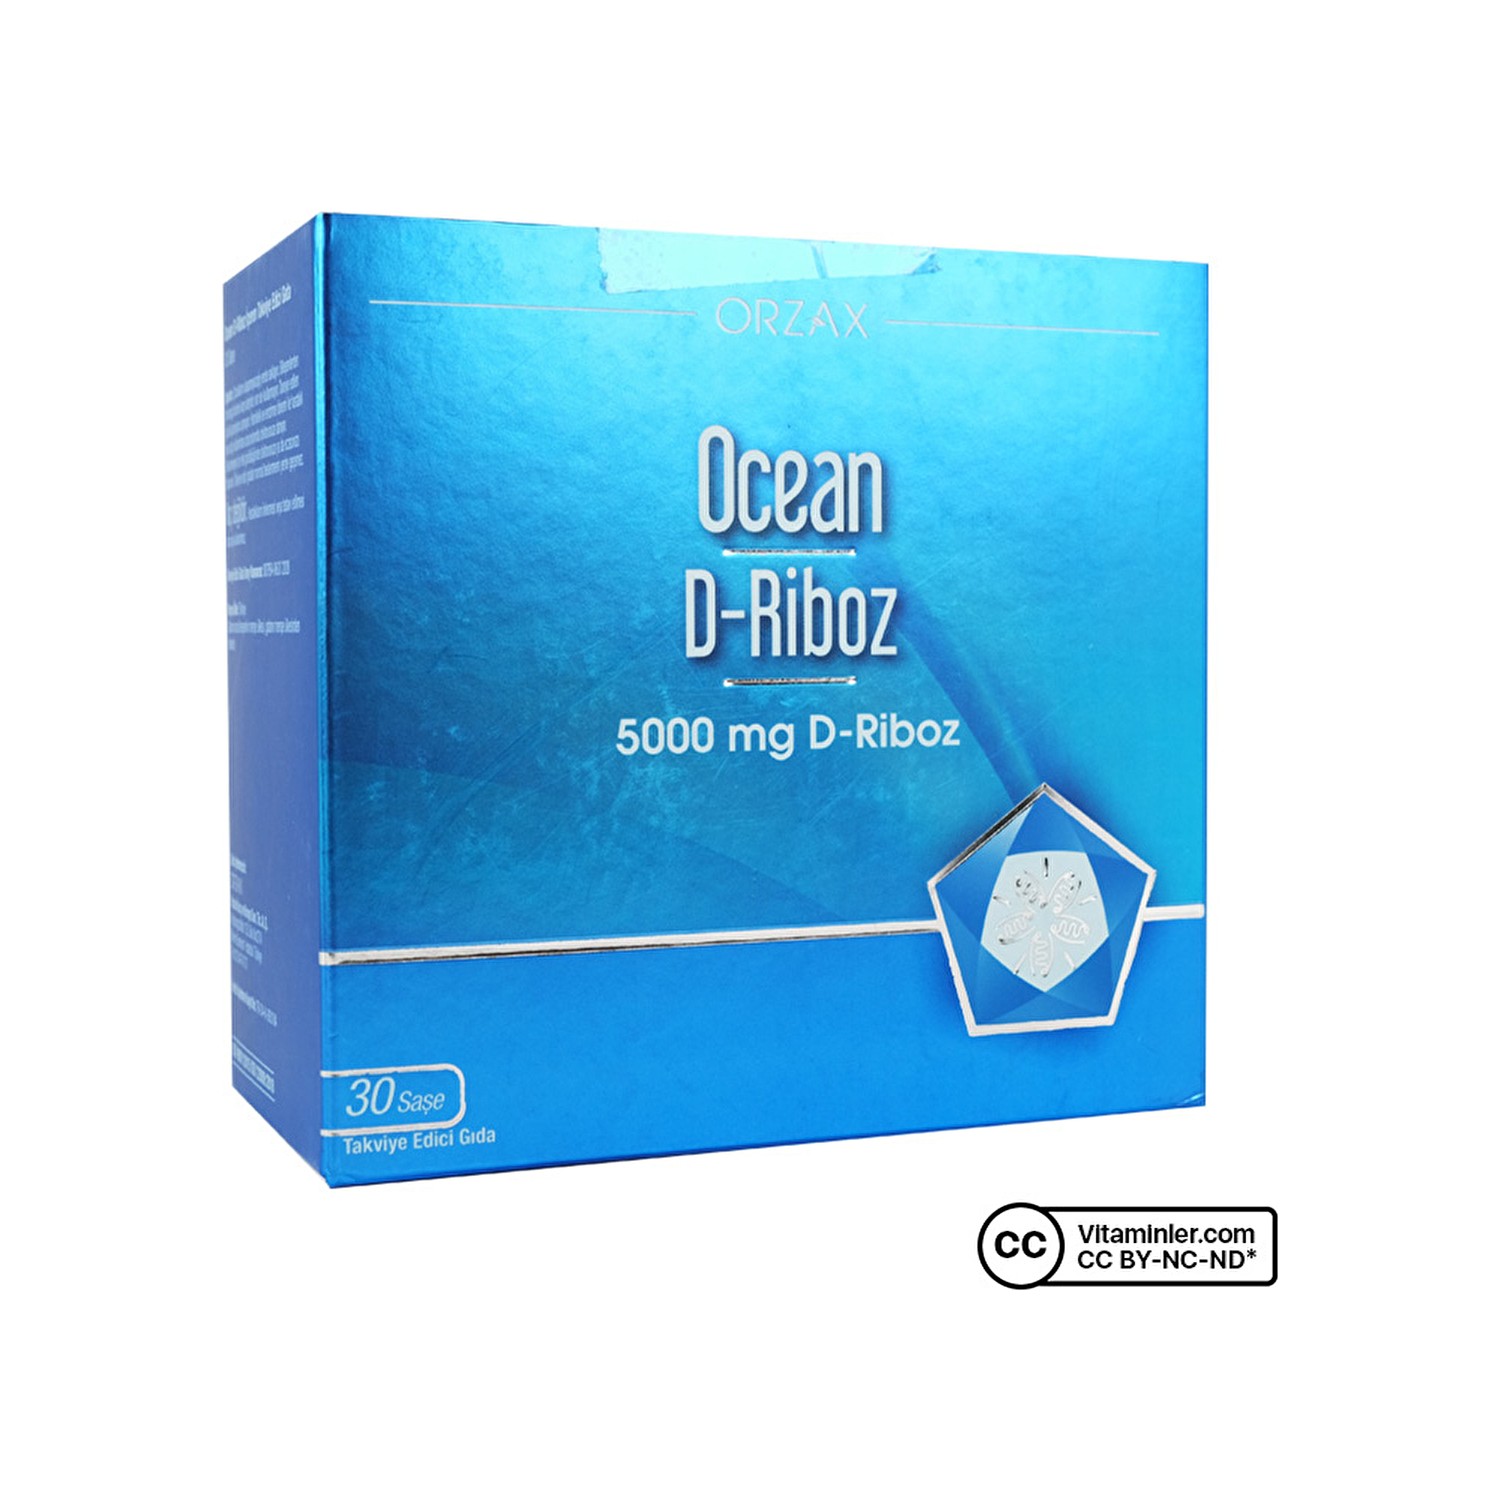 Активная добавка Ocean D-Riboz 30 Sase, 5000 мг цена и фото